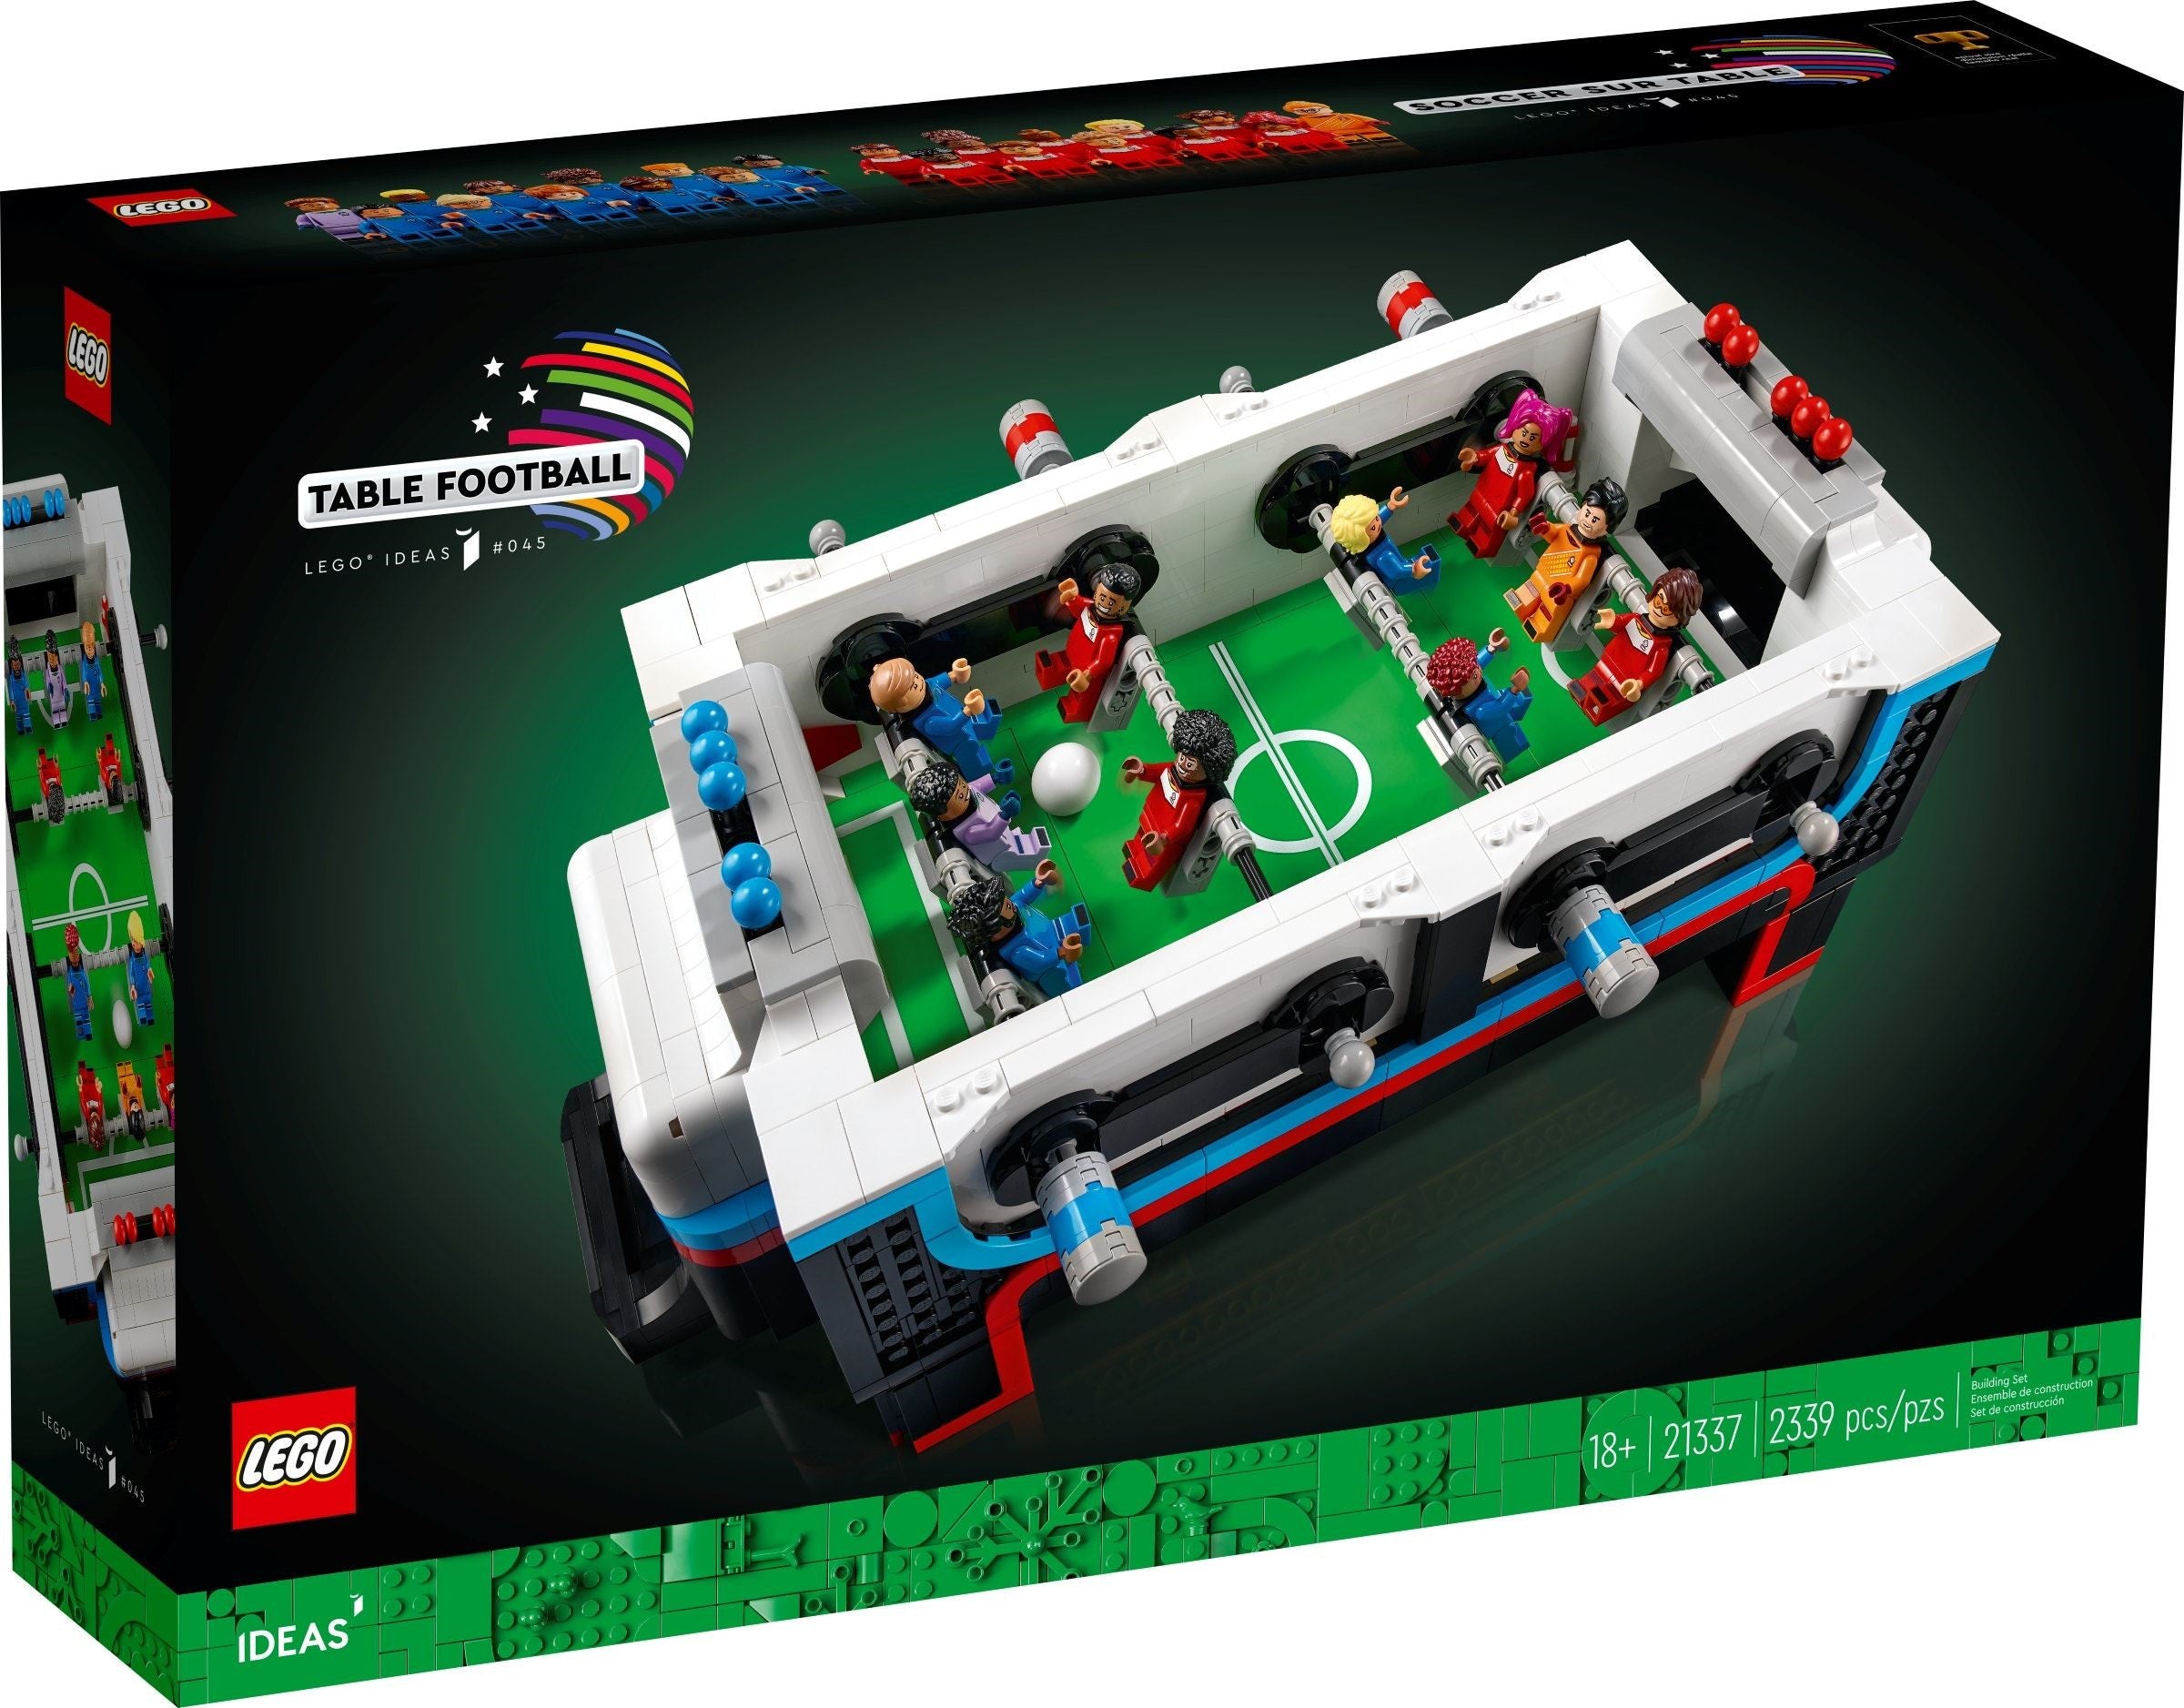 LEGO 21337 Ideas Table Football Set